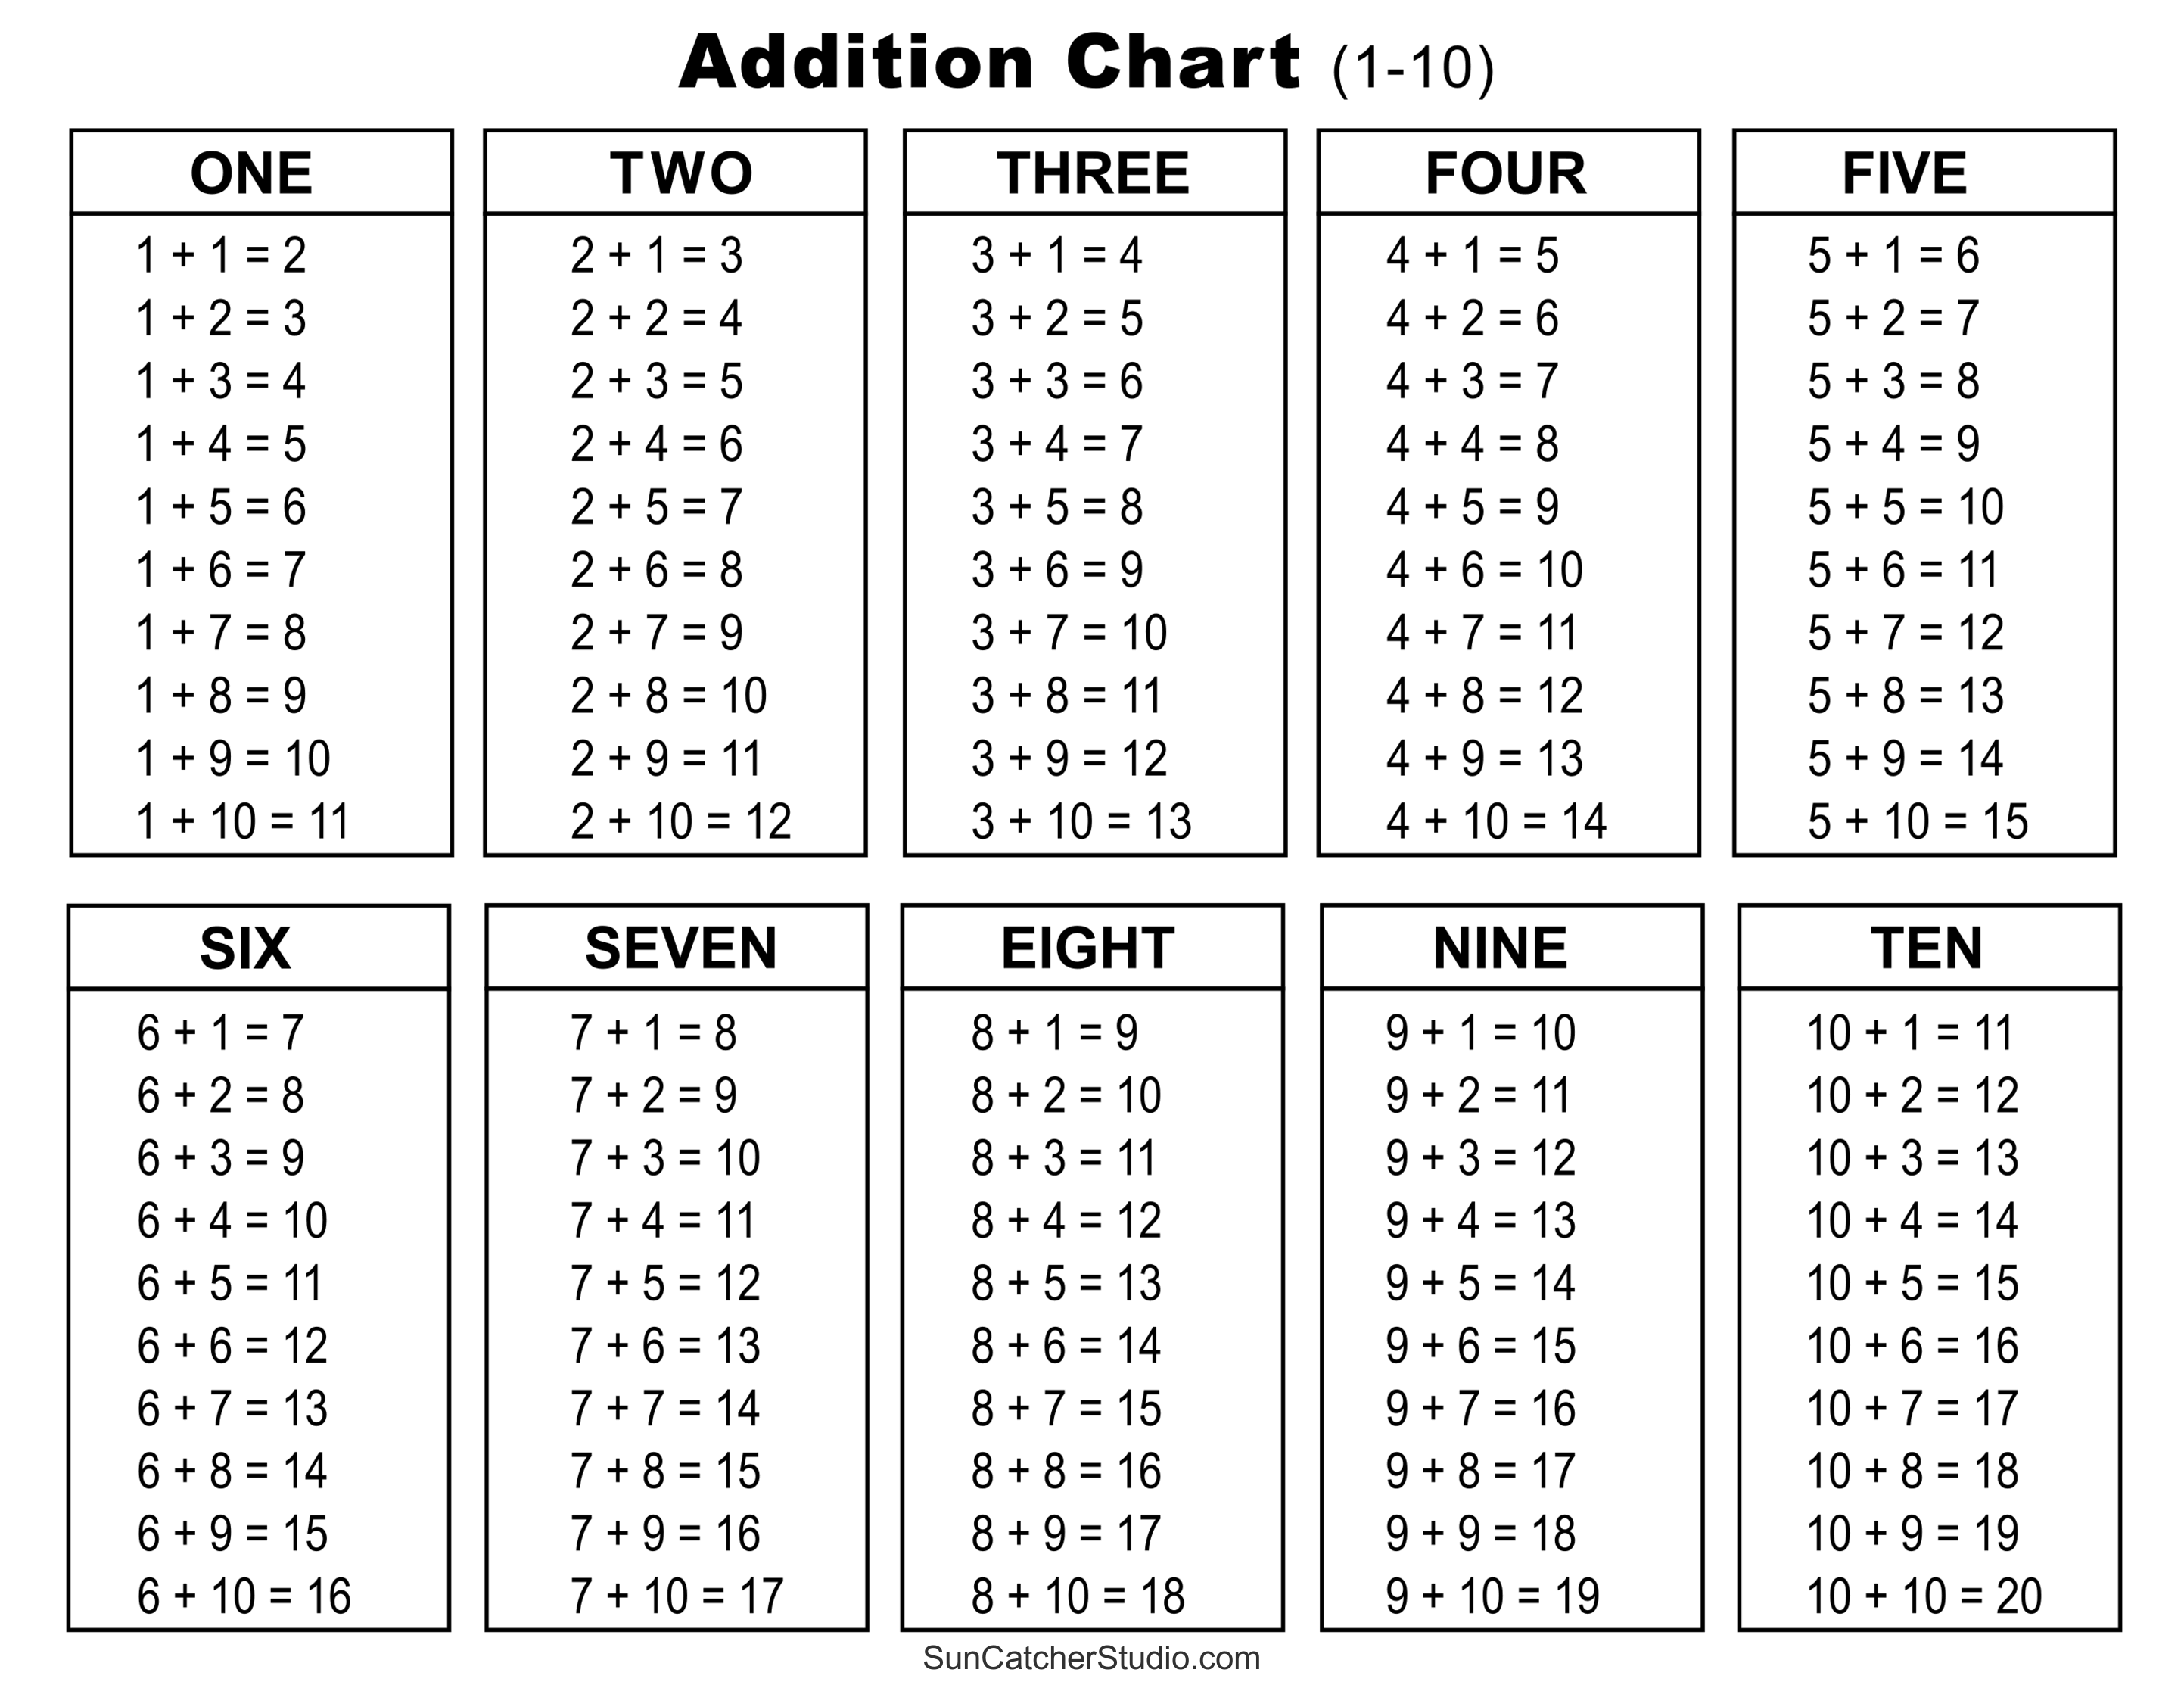 Addition Charts Tables Worksheets (Free Printable PDF files) DIY